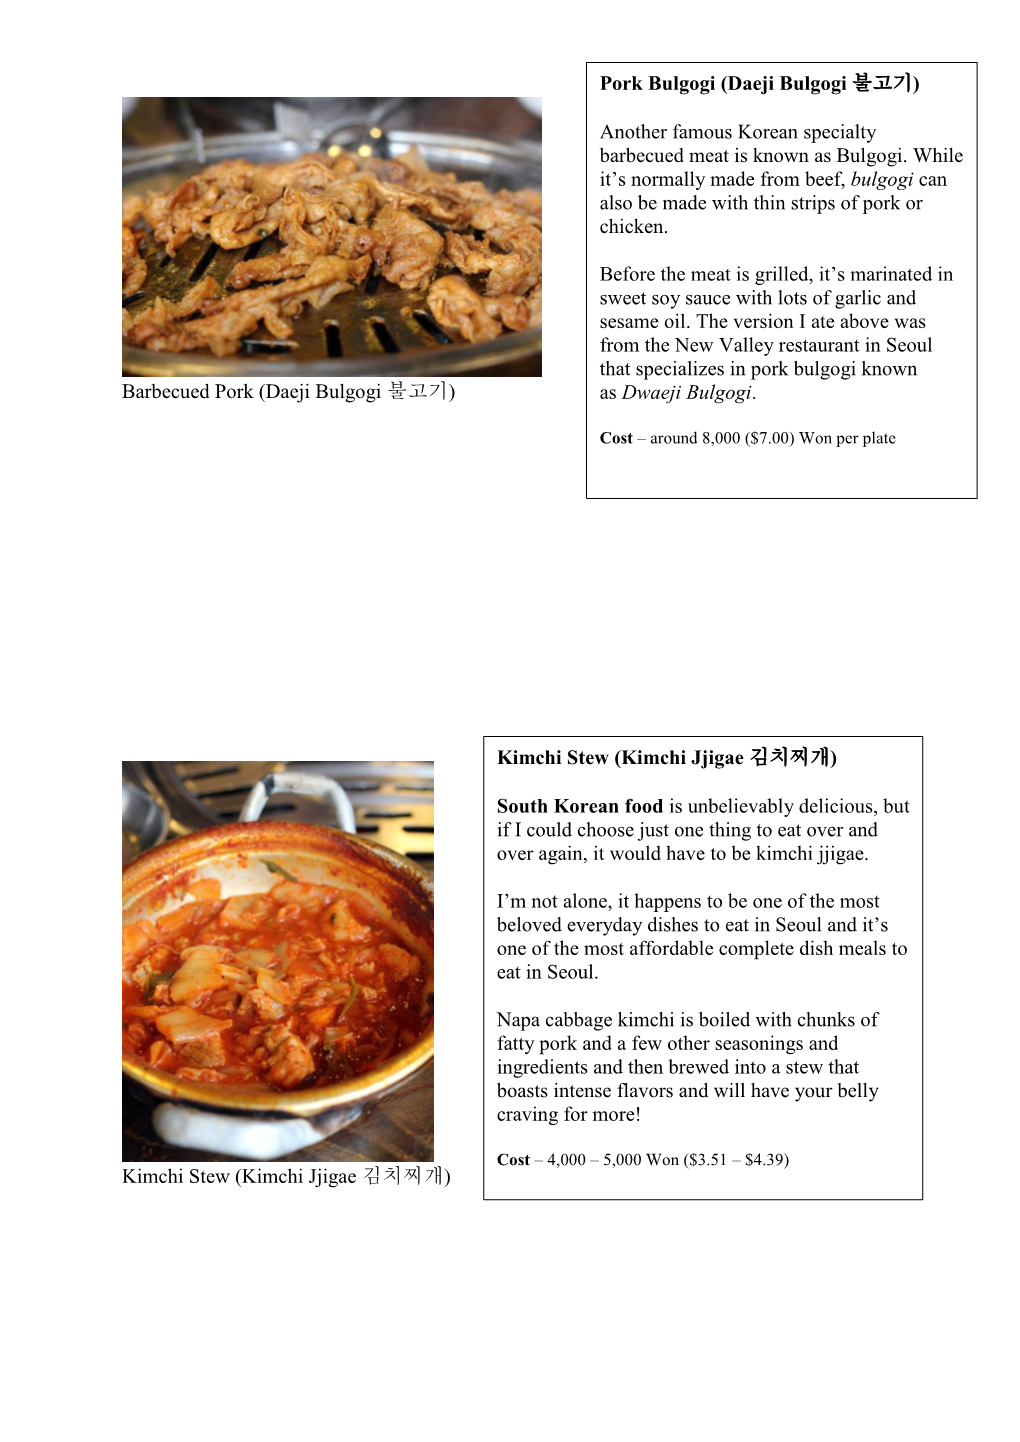 Barbecued Pork (Daeji Bulgogi 불고기) Kimchi Stew (Kimchi Jjigae 김치